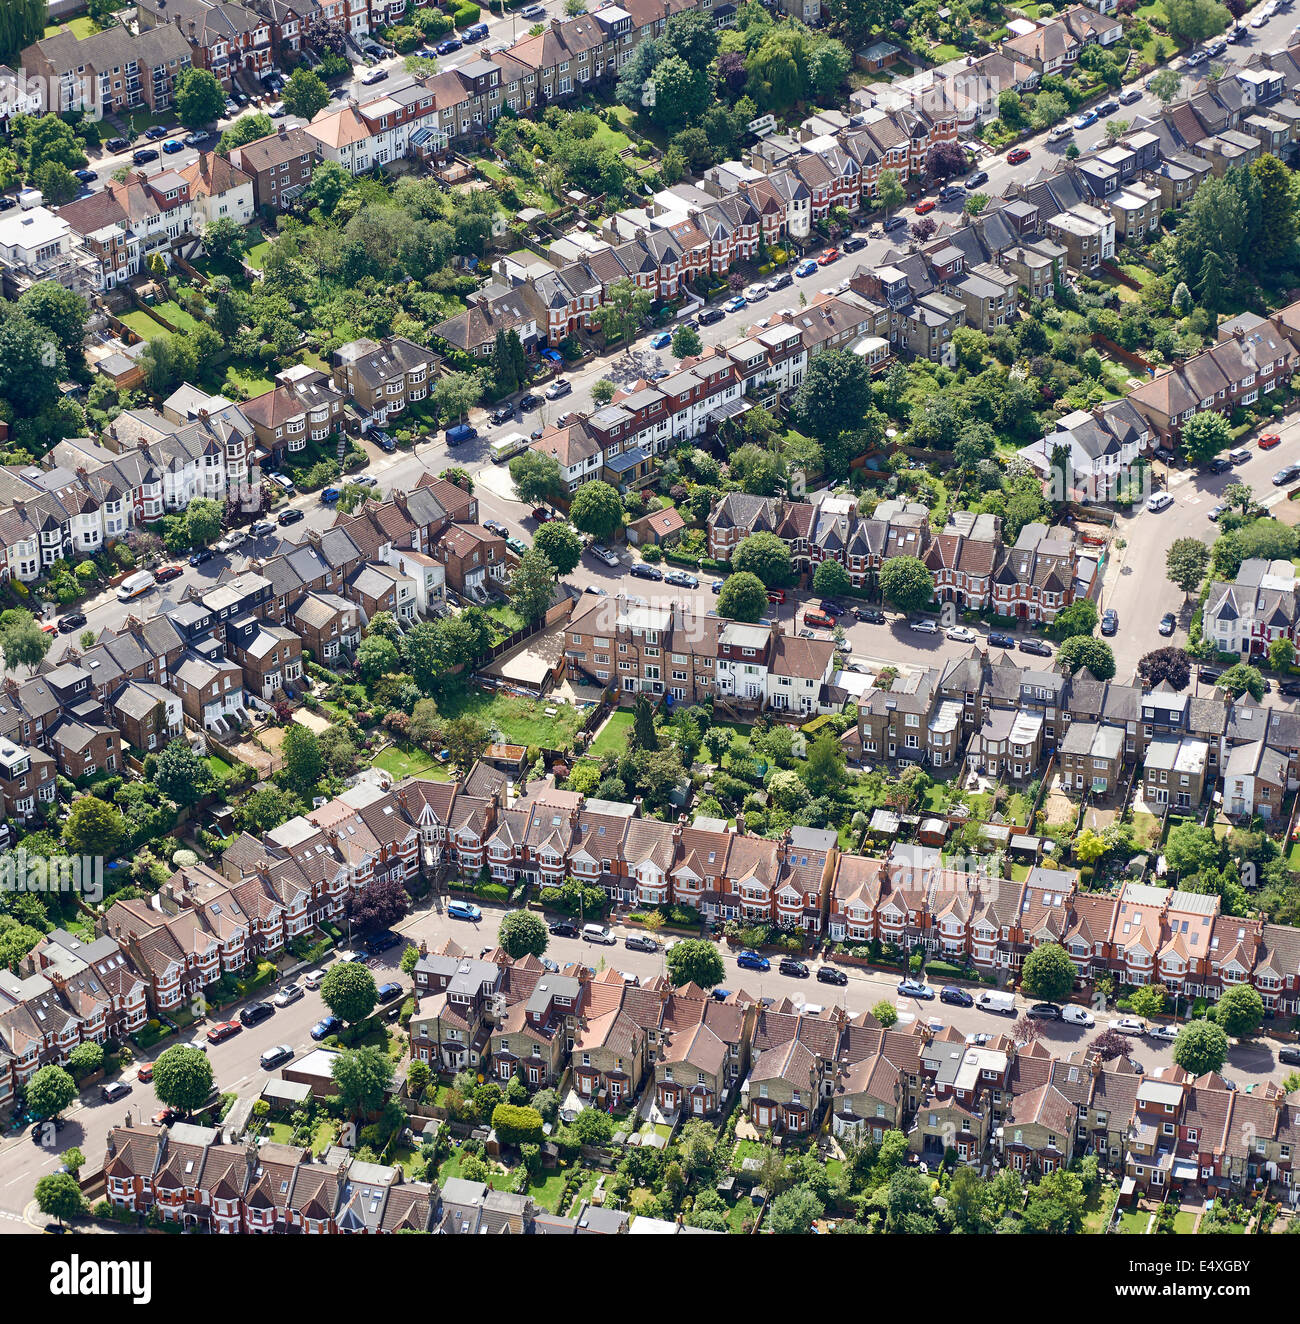 suburban-housing-north-london-around-hornsea-area-south-east-england-E4XGBY.jpg